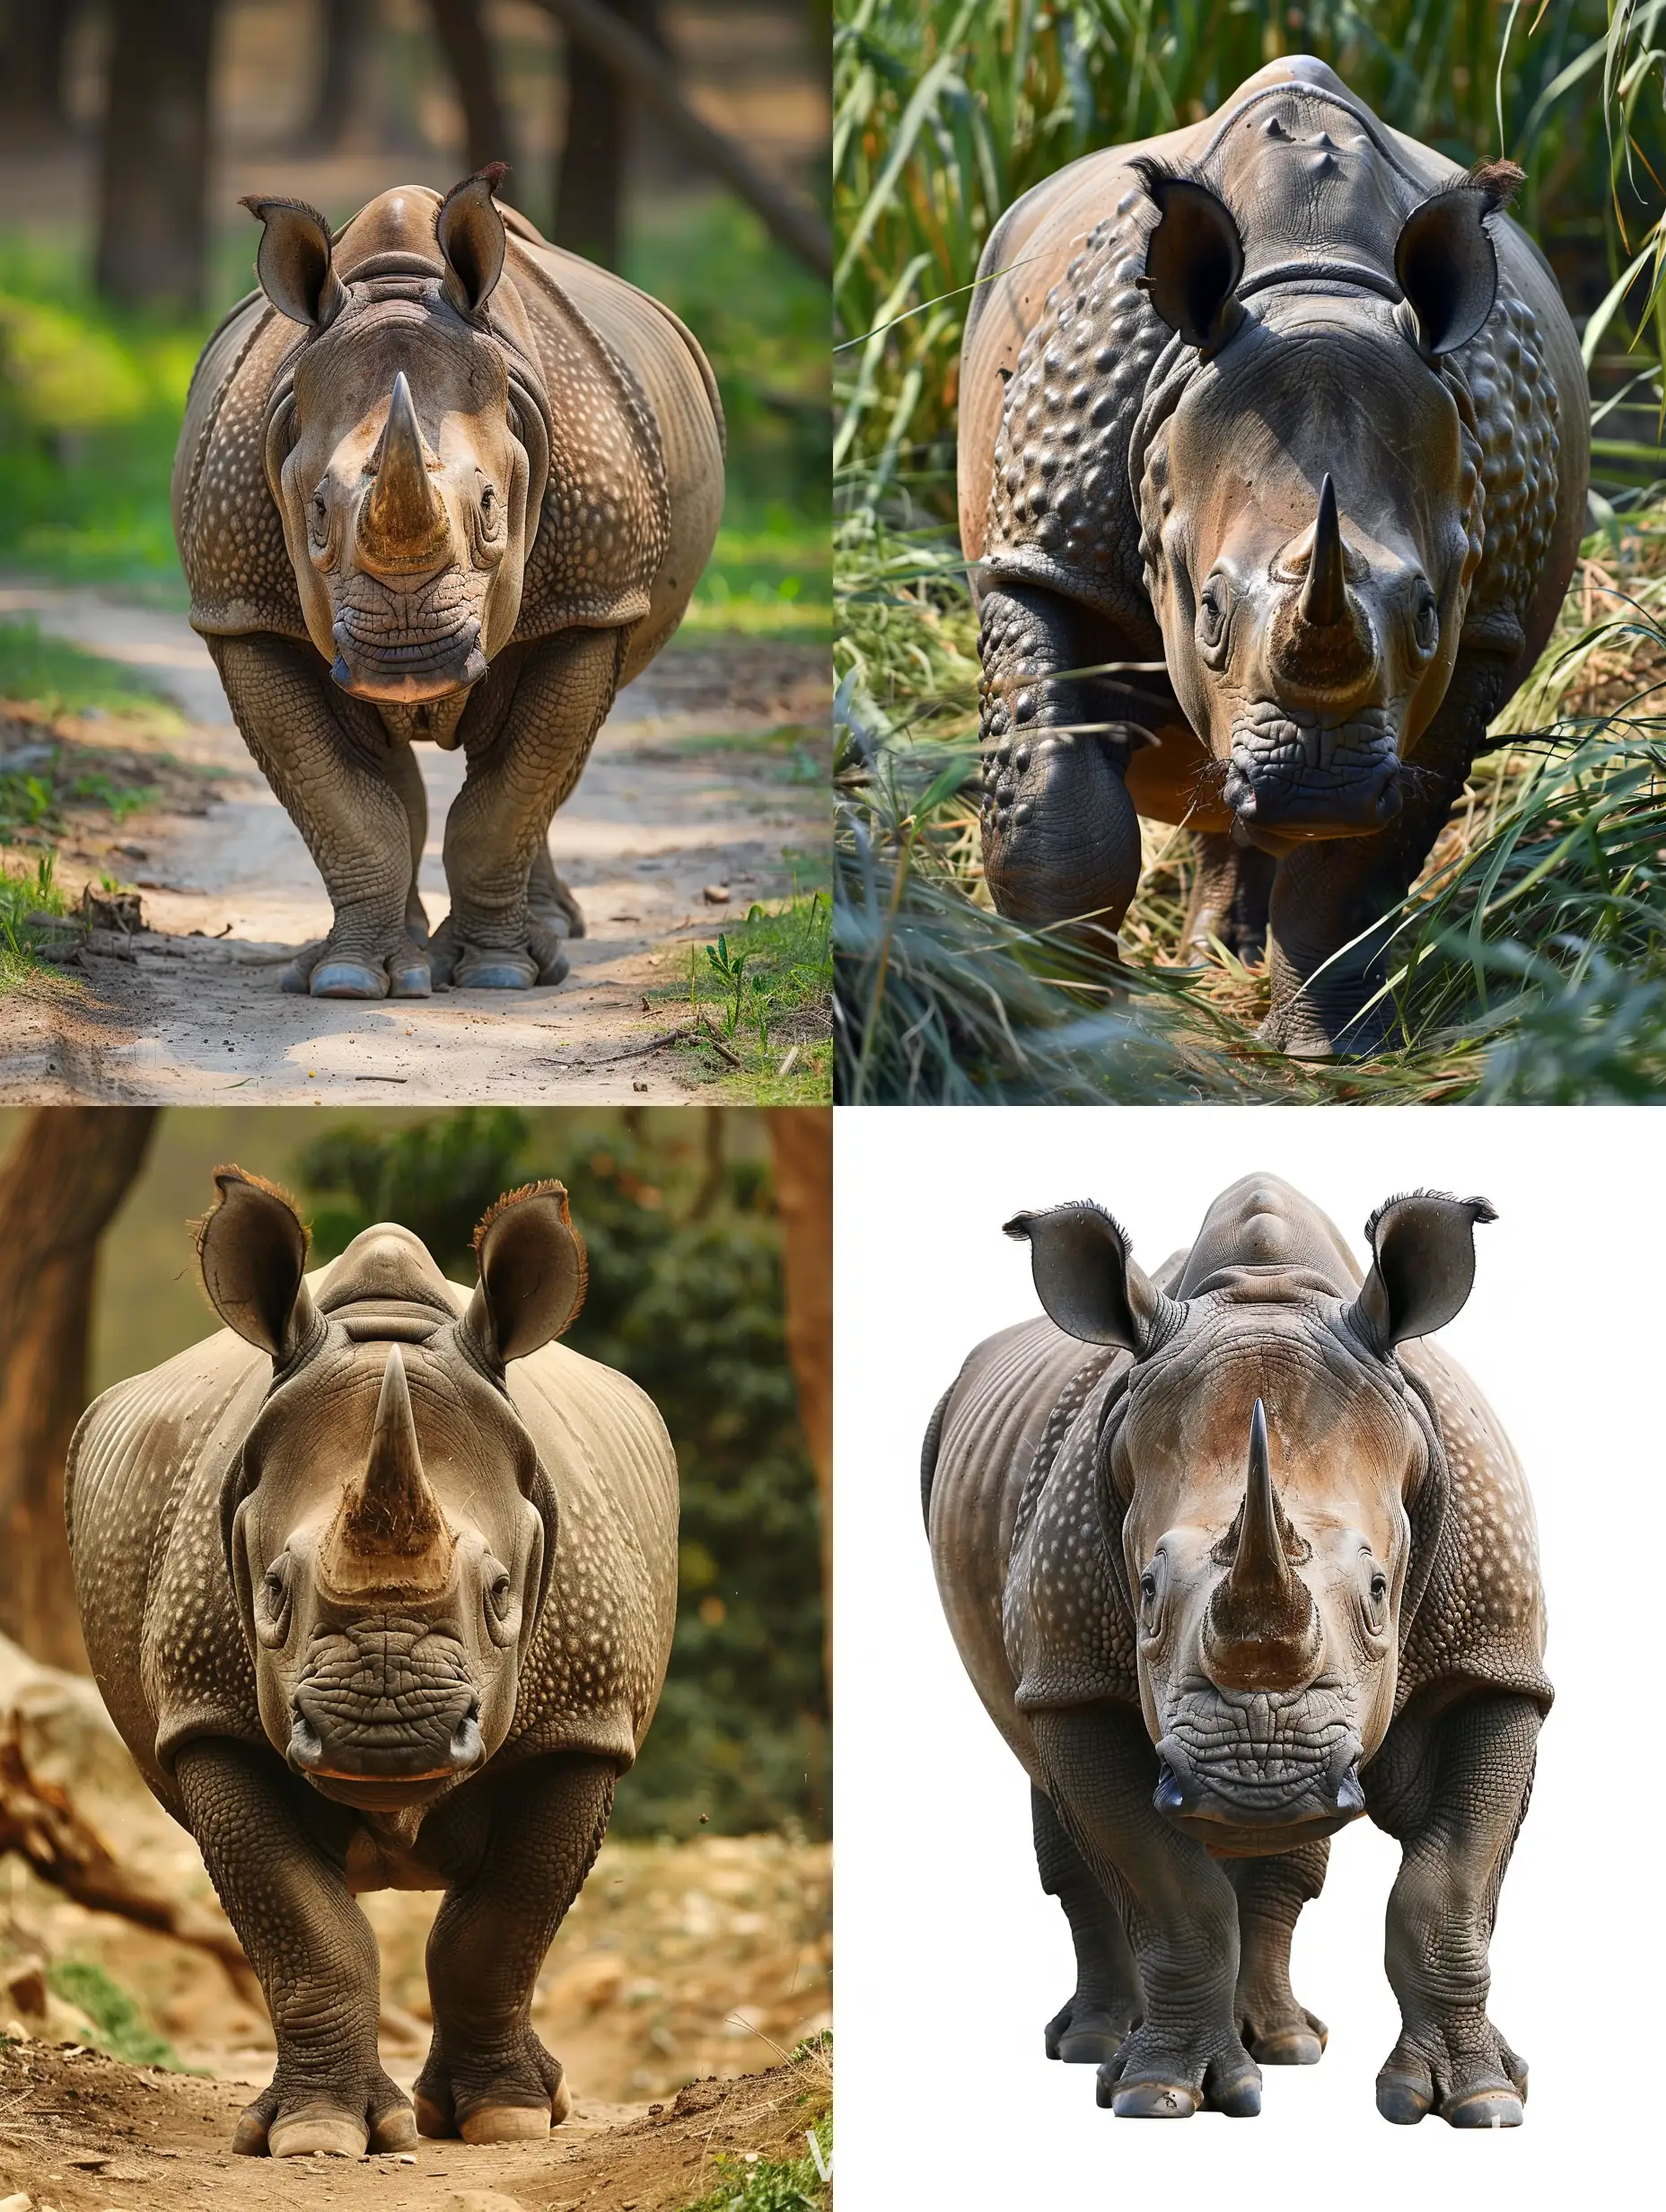 Javan-Rhino-Grazing-in-Lush-Tropical-Forest